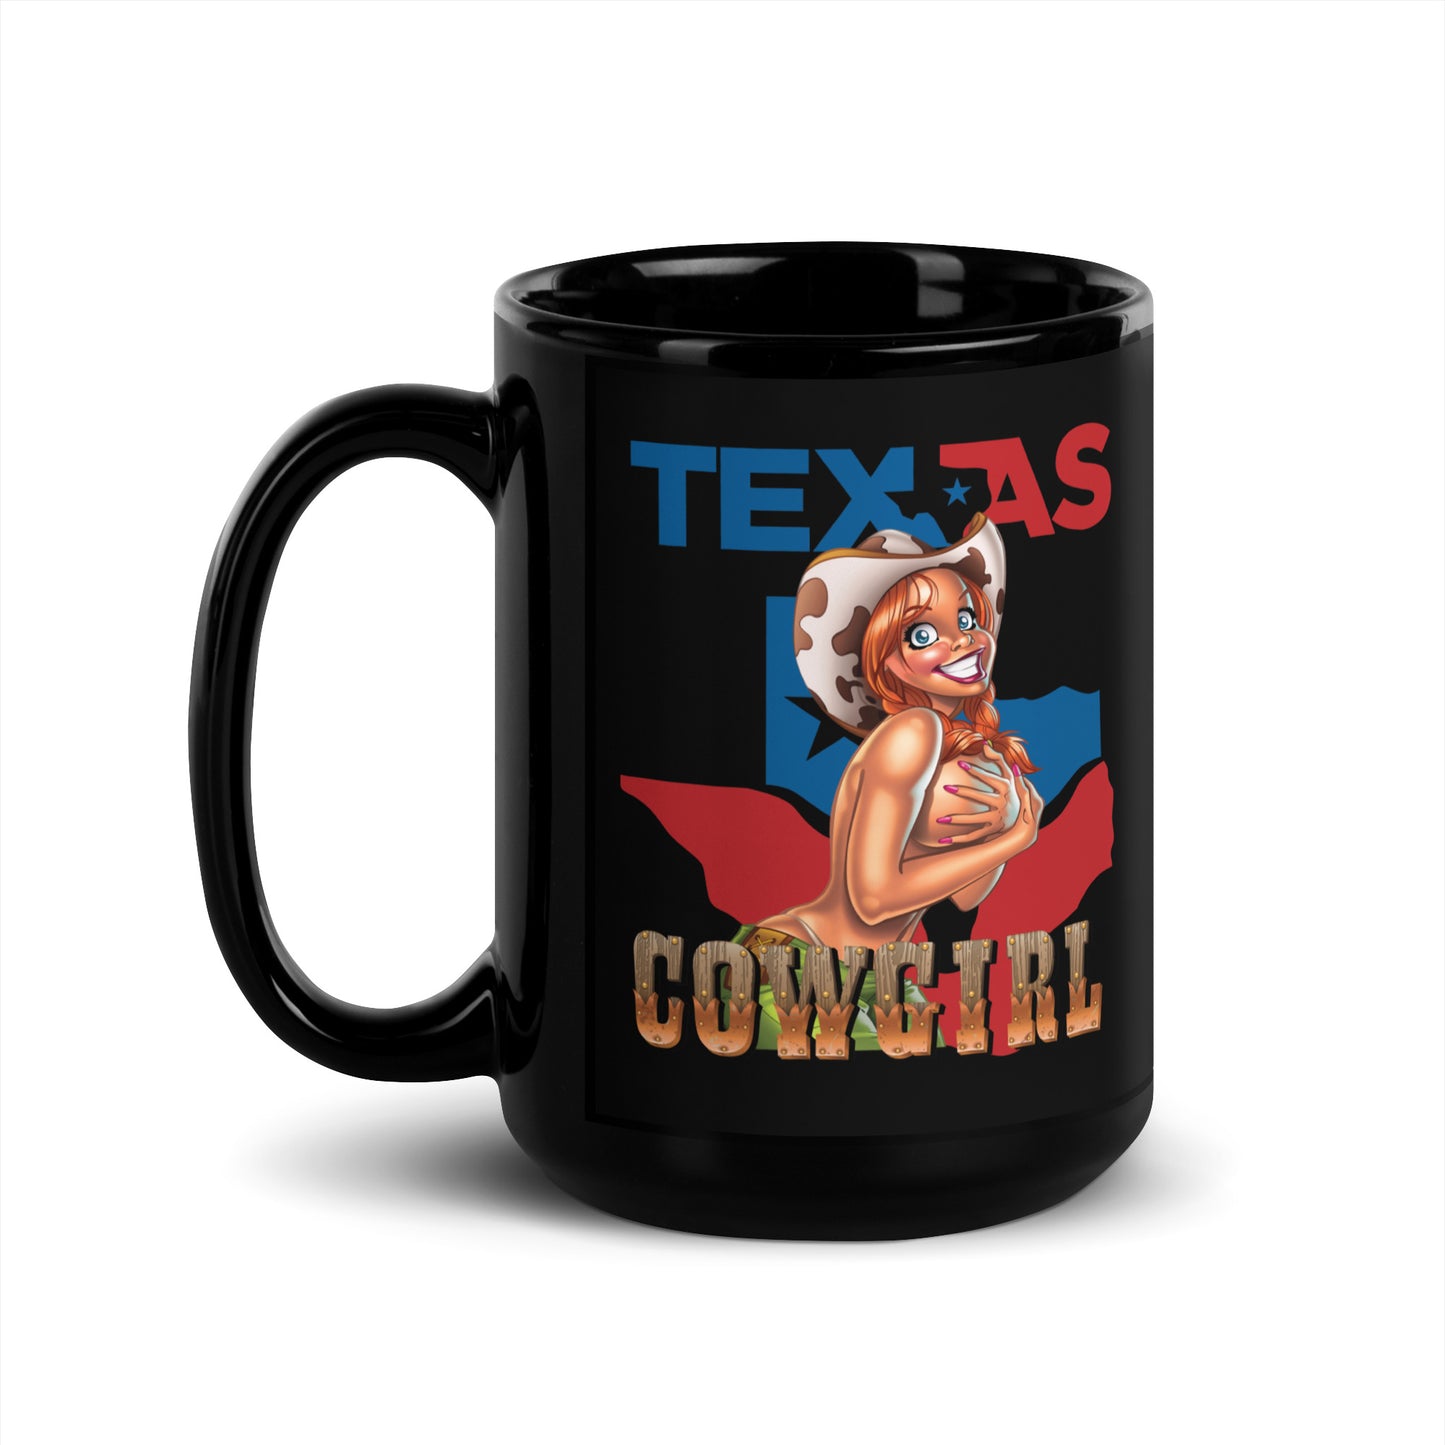 Texas Cowgirl Coffee Mug